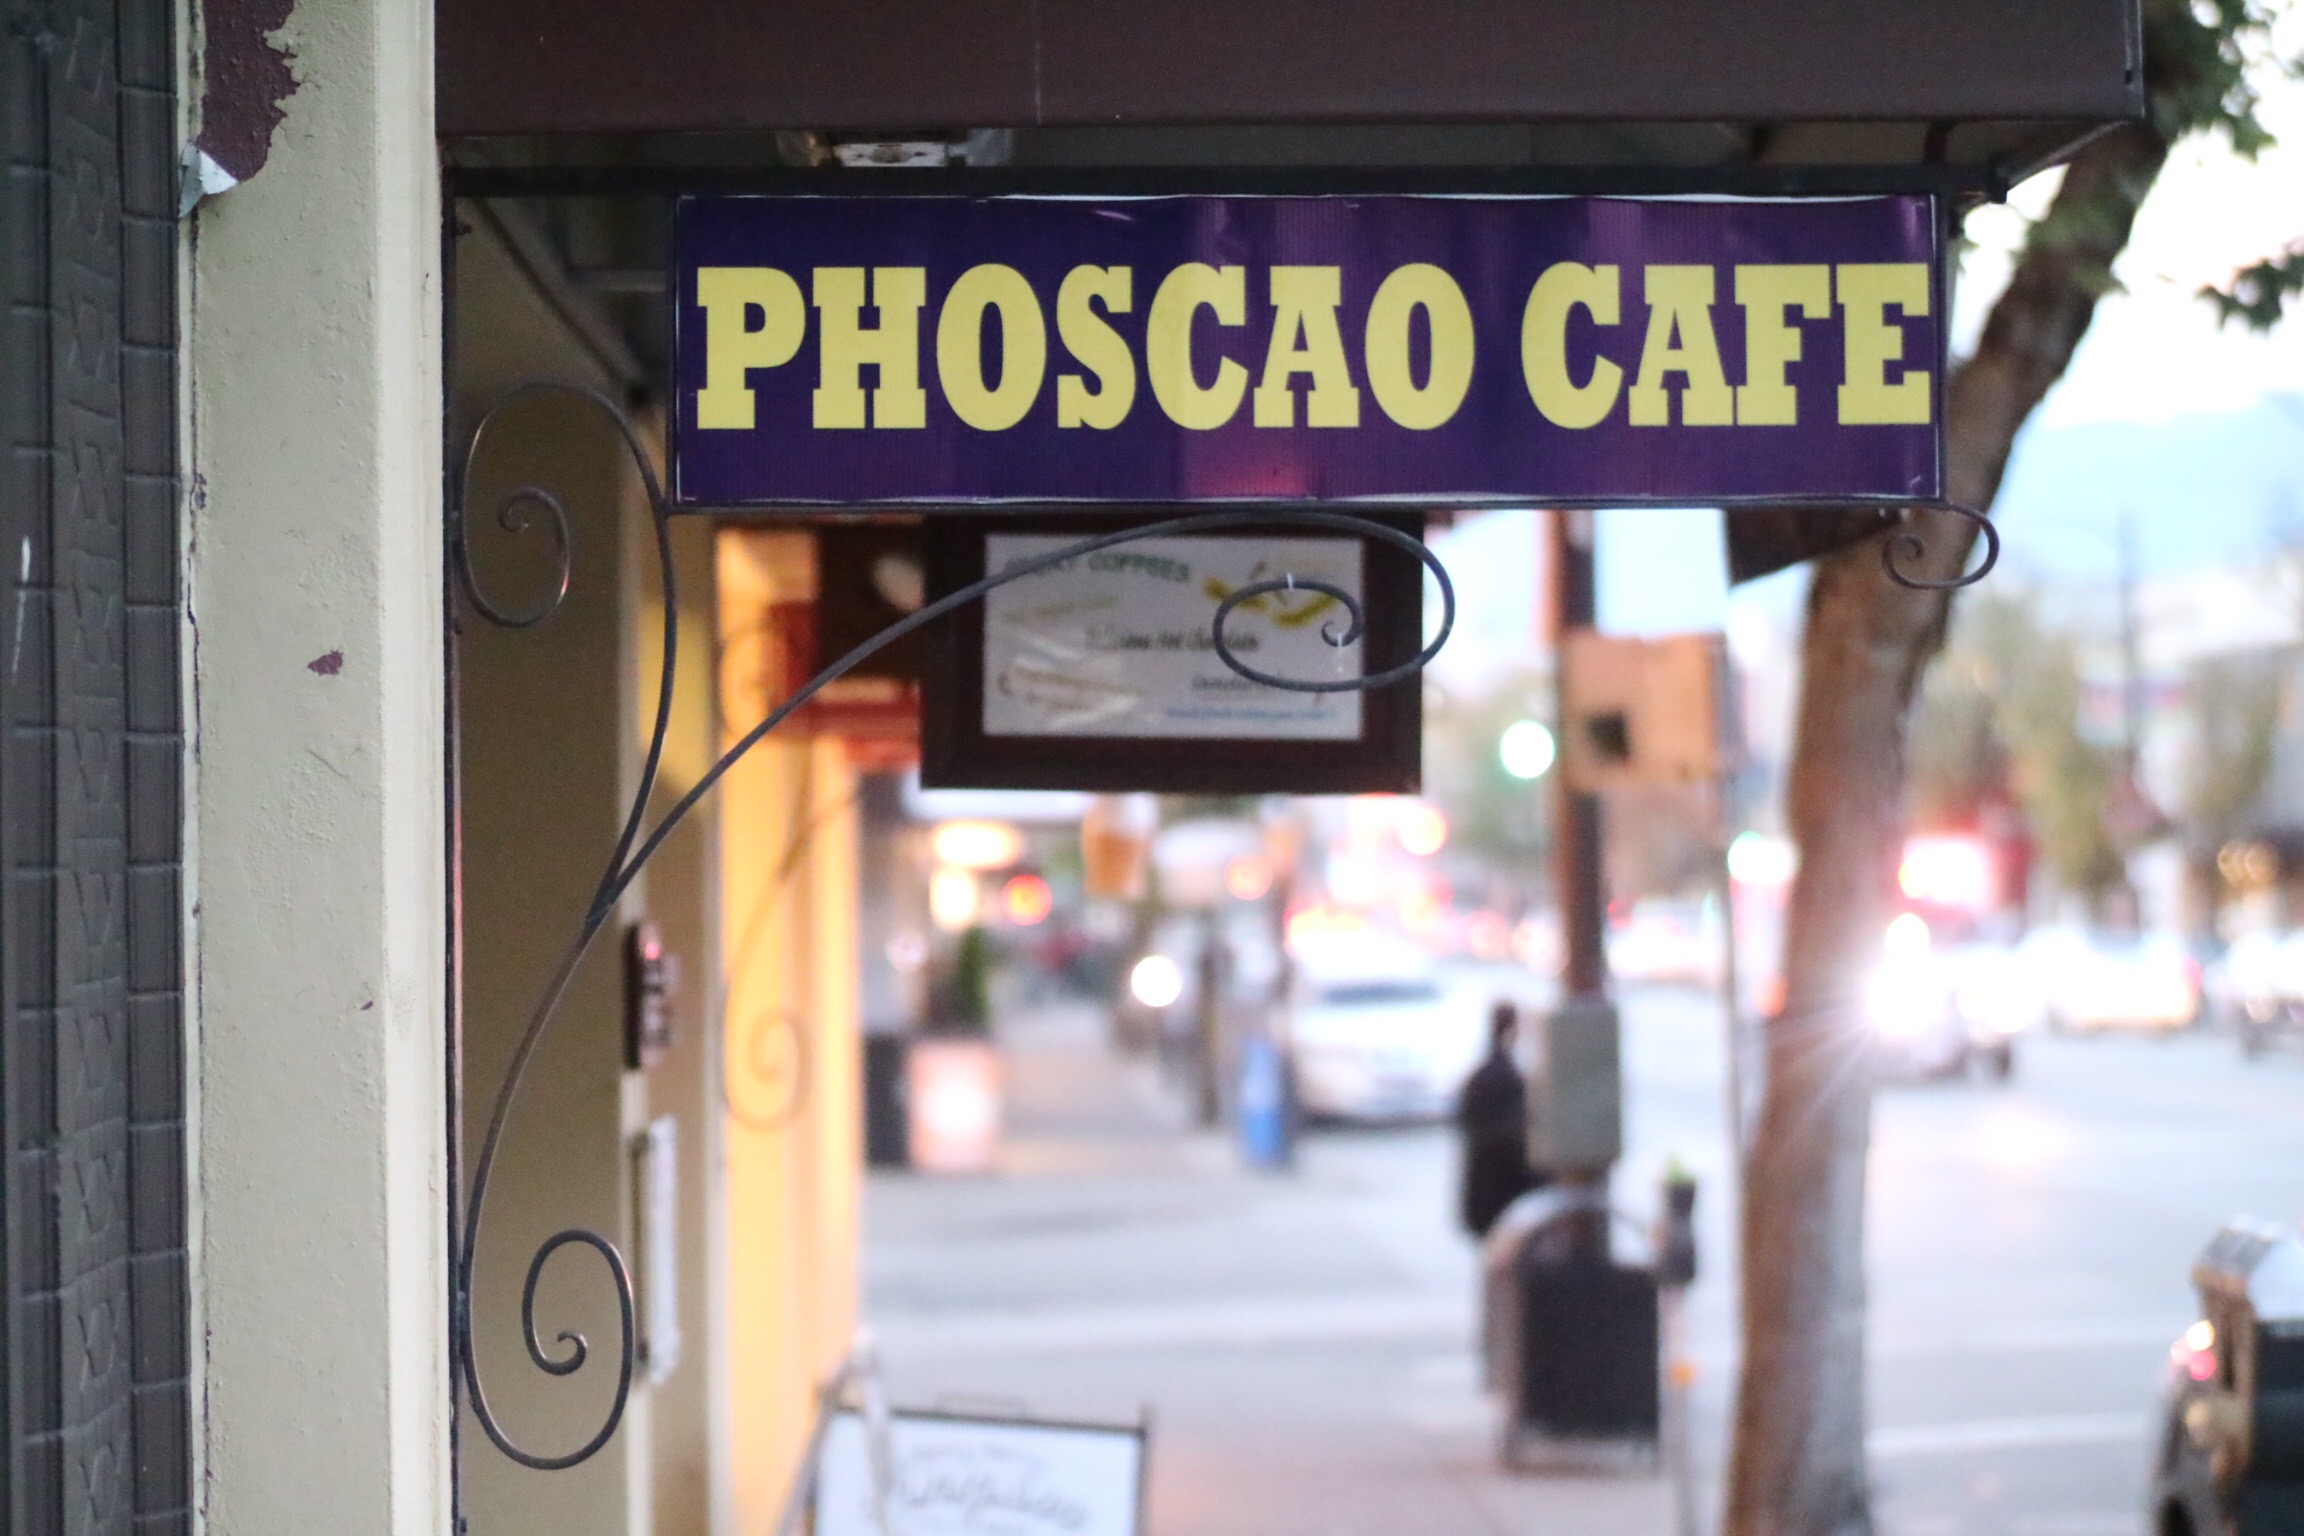 Phoscao Cafe